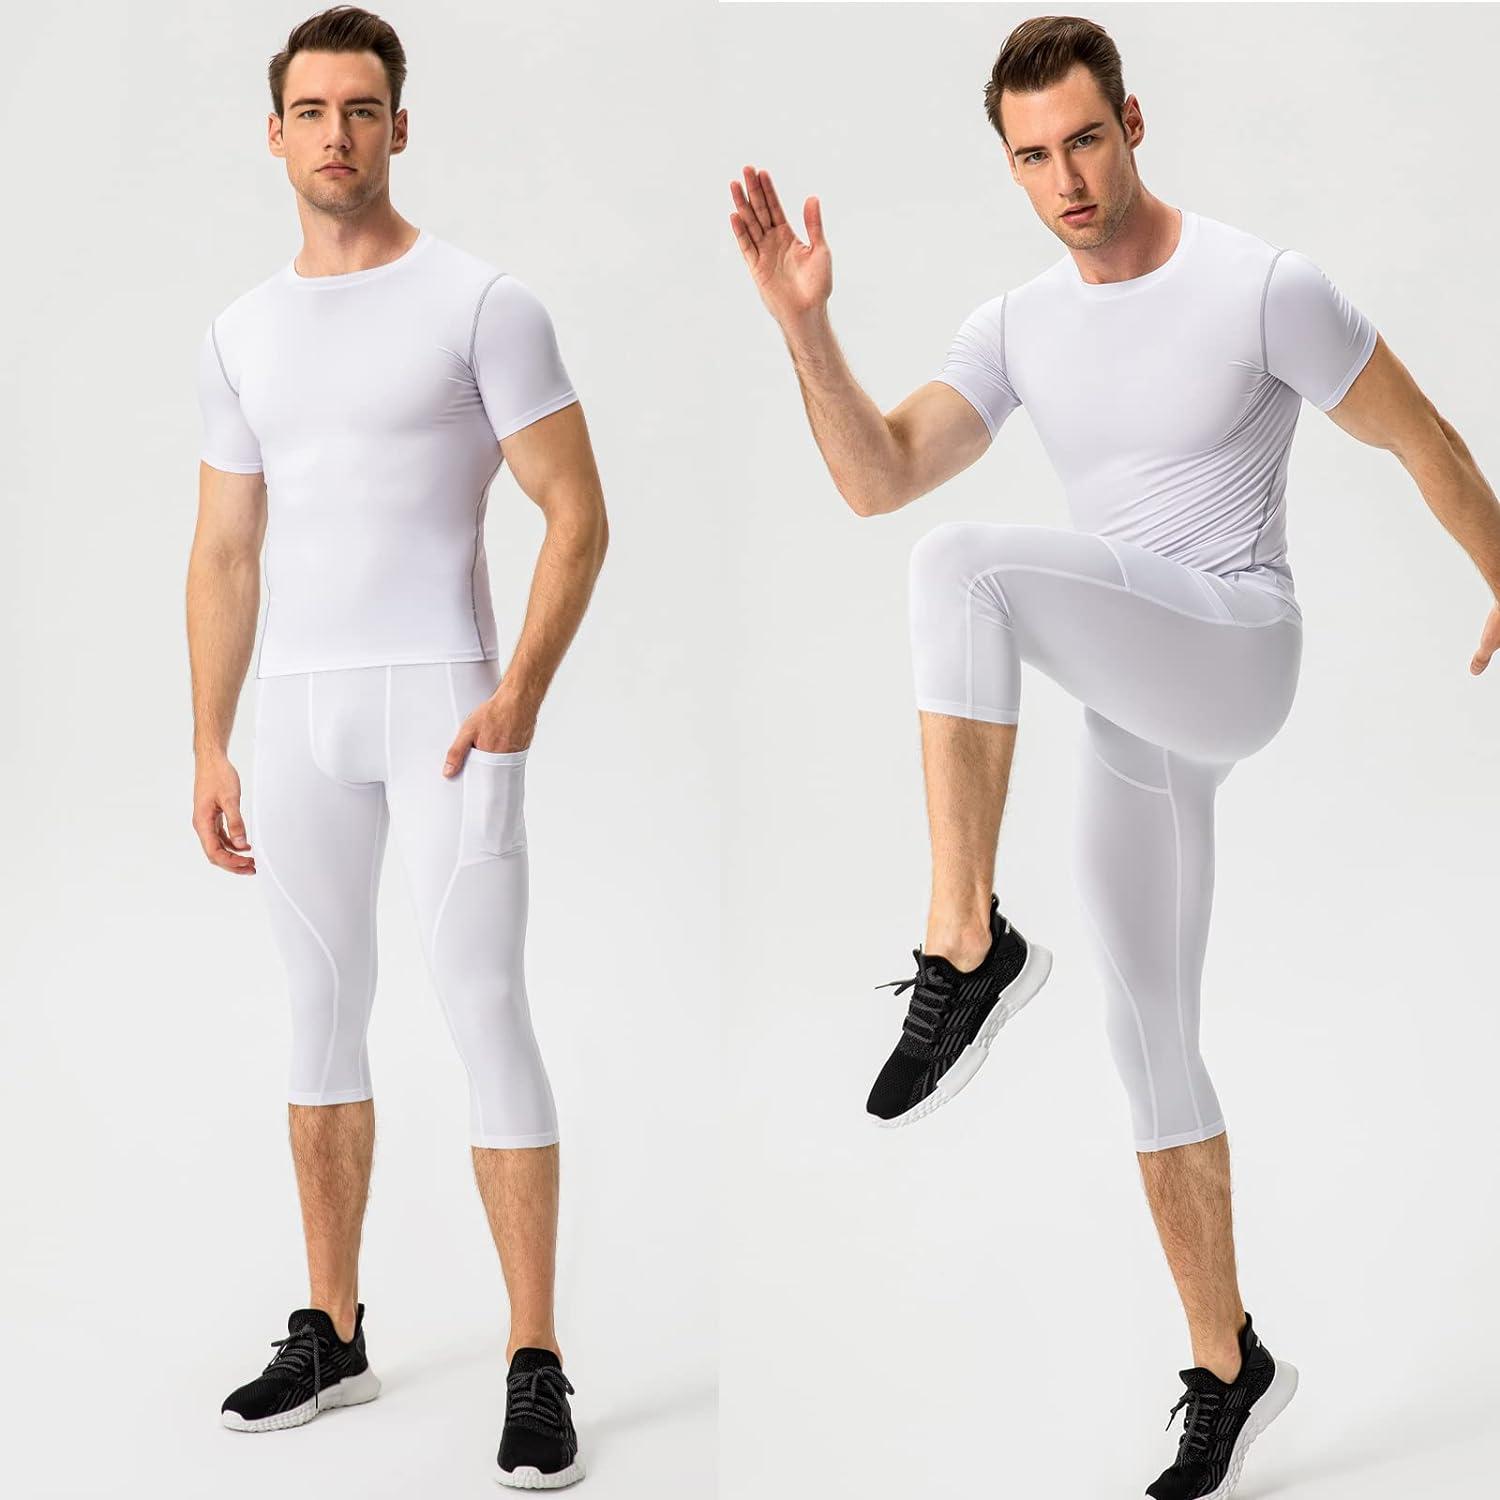 SPVISE Compression Pants Men Gym Leggings Workout Running Tights